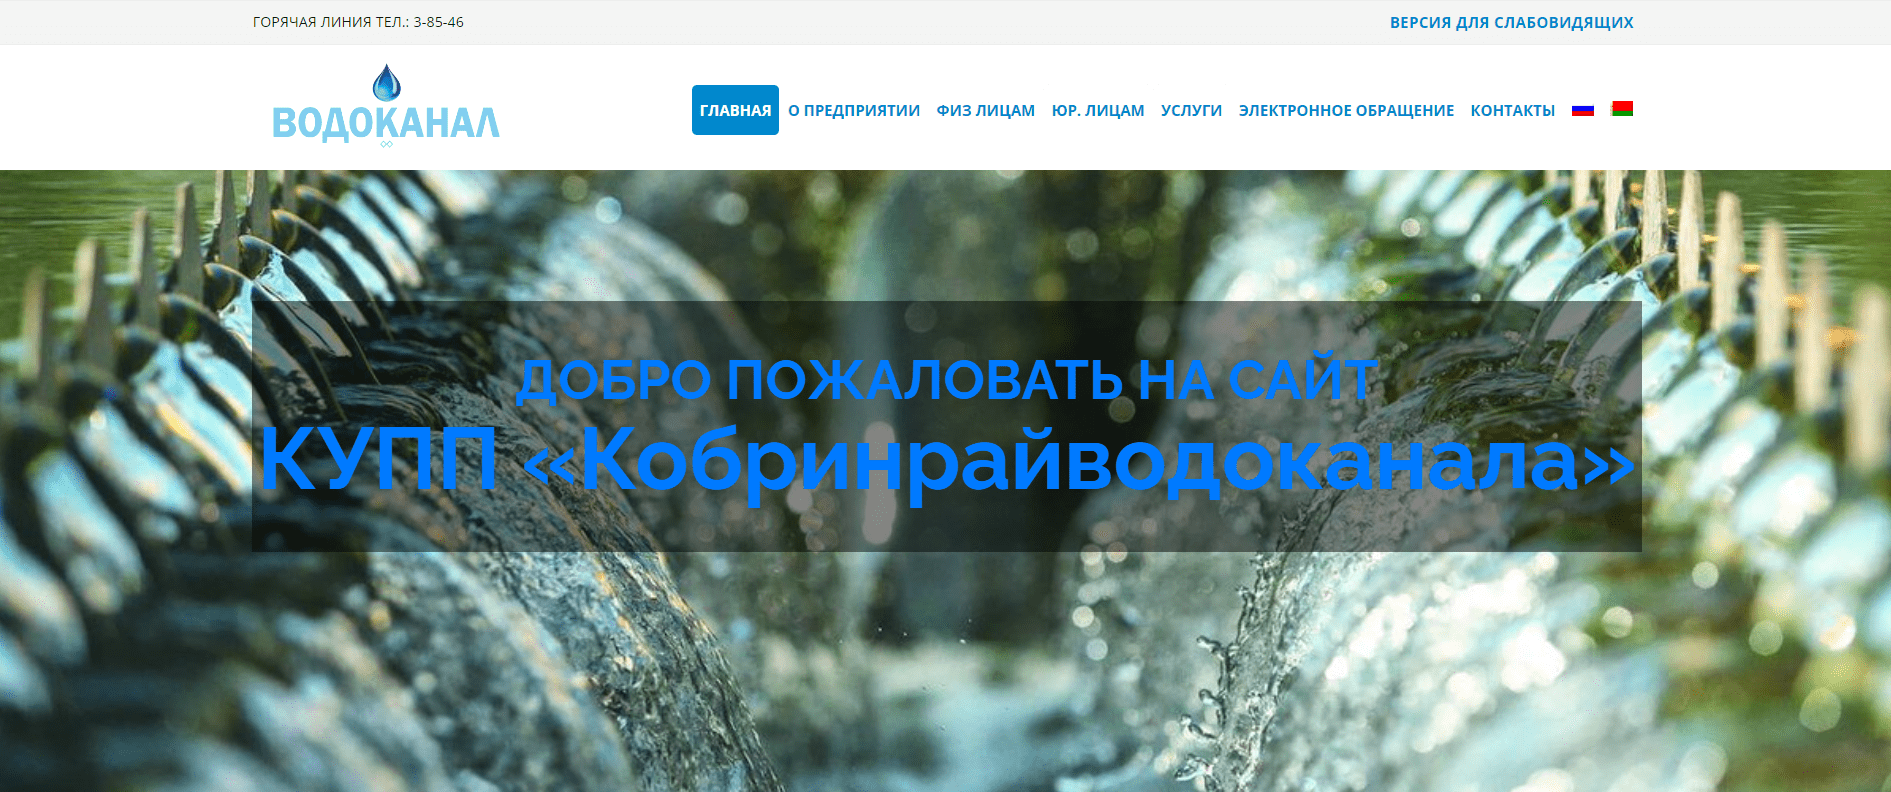 Кобринрайводоканал (kobrinvodokanal.by) - официальный сайт